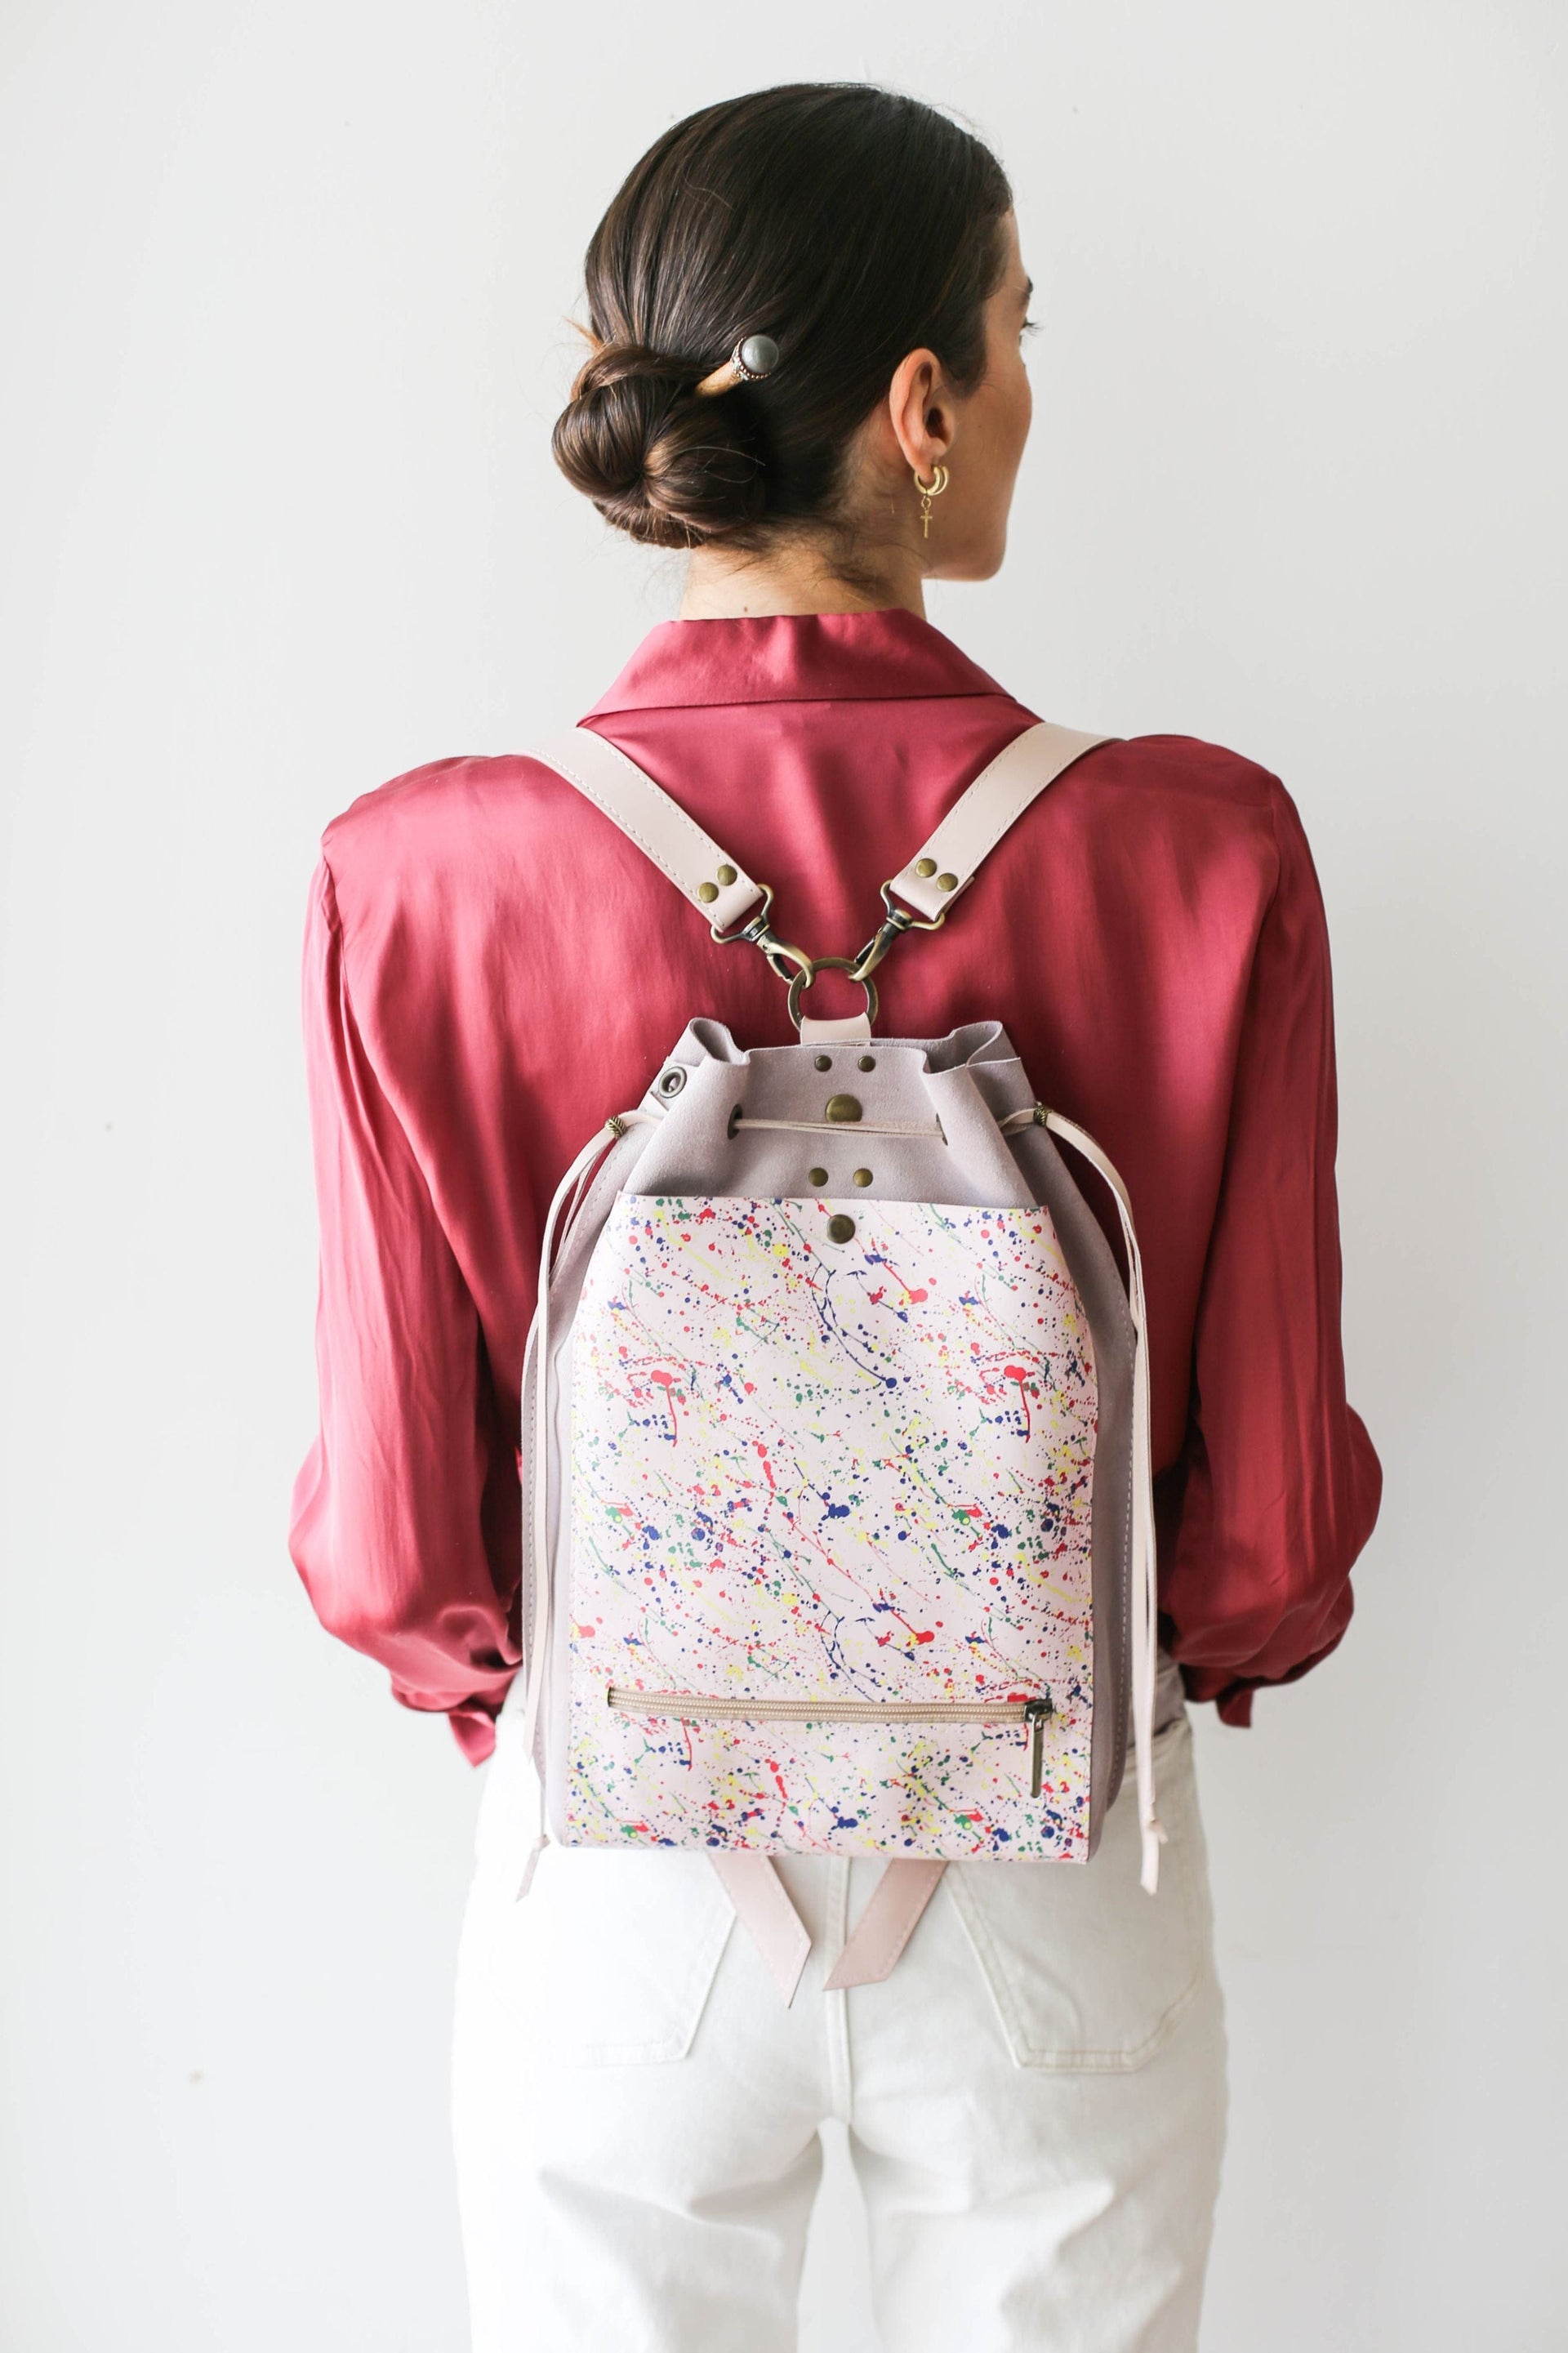 Designer Backpack Purses, Leather Bags